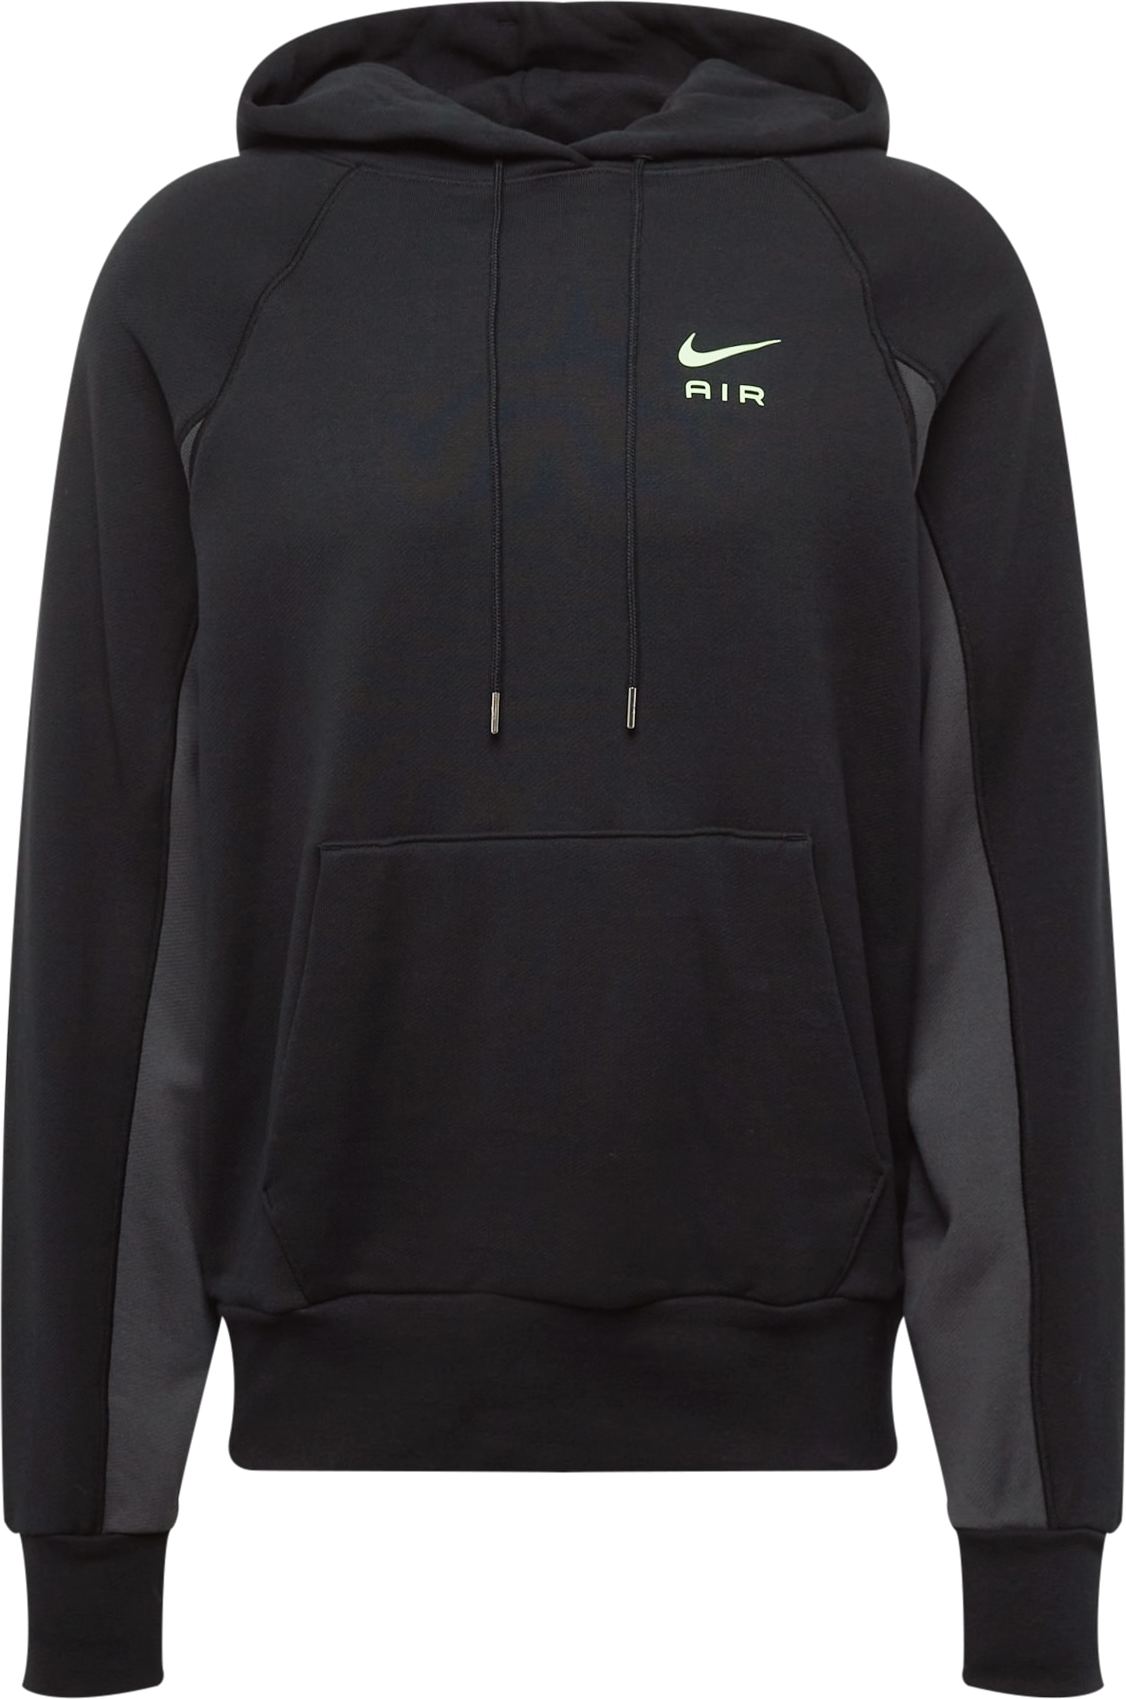 Mikina Nike Sportswear tmavě šedá / černá